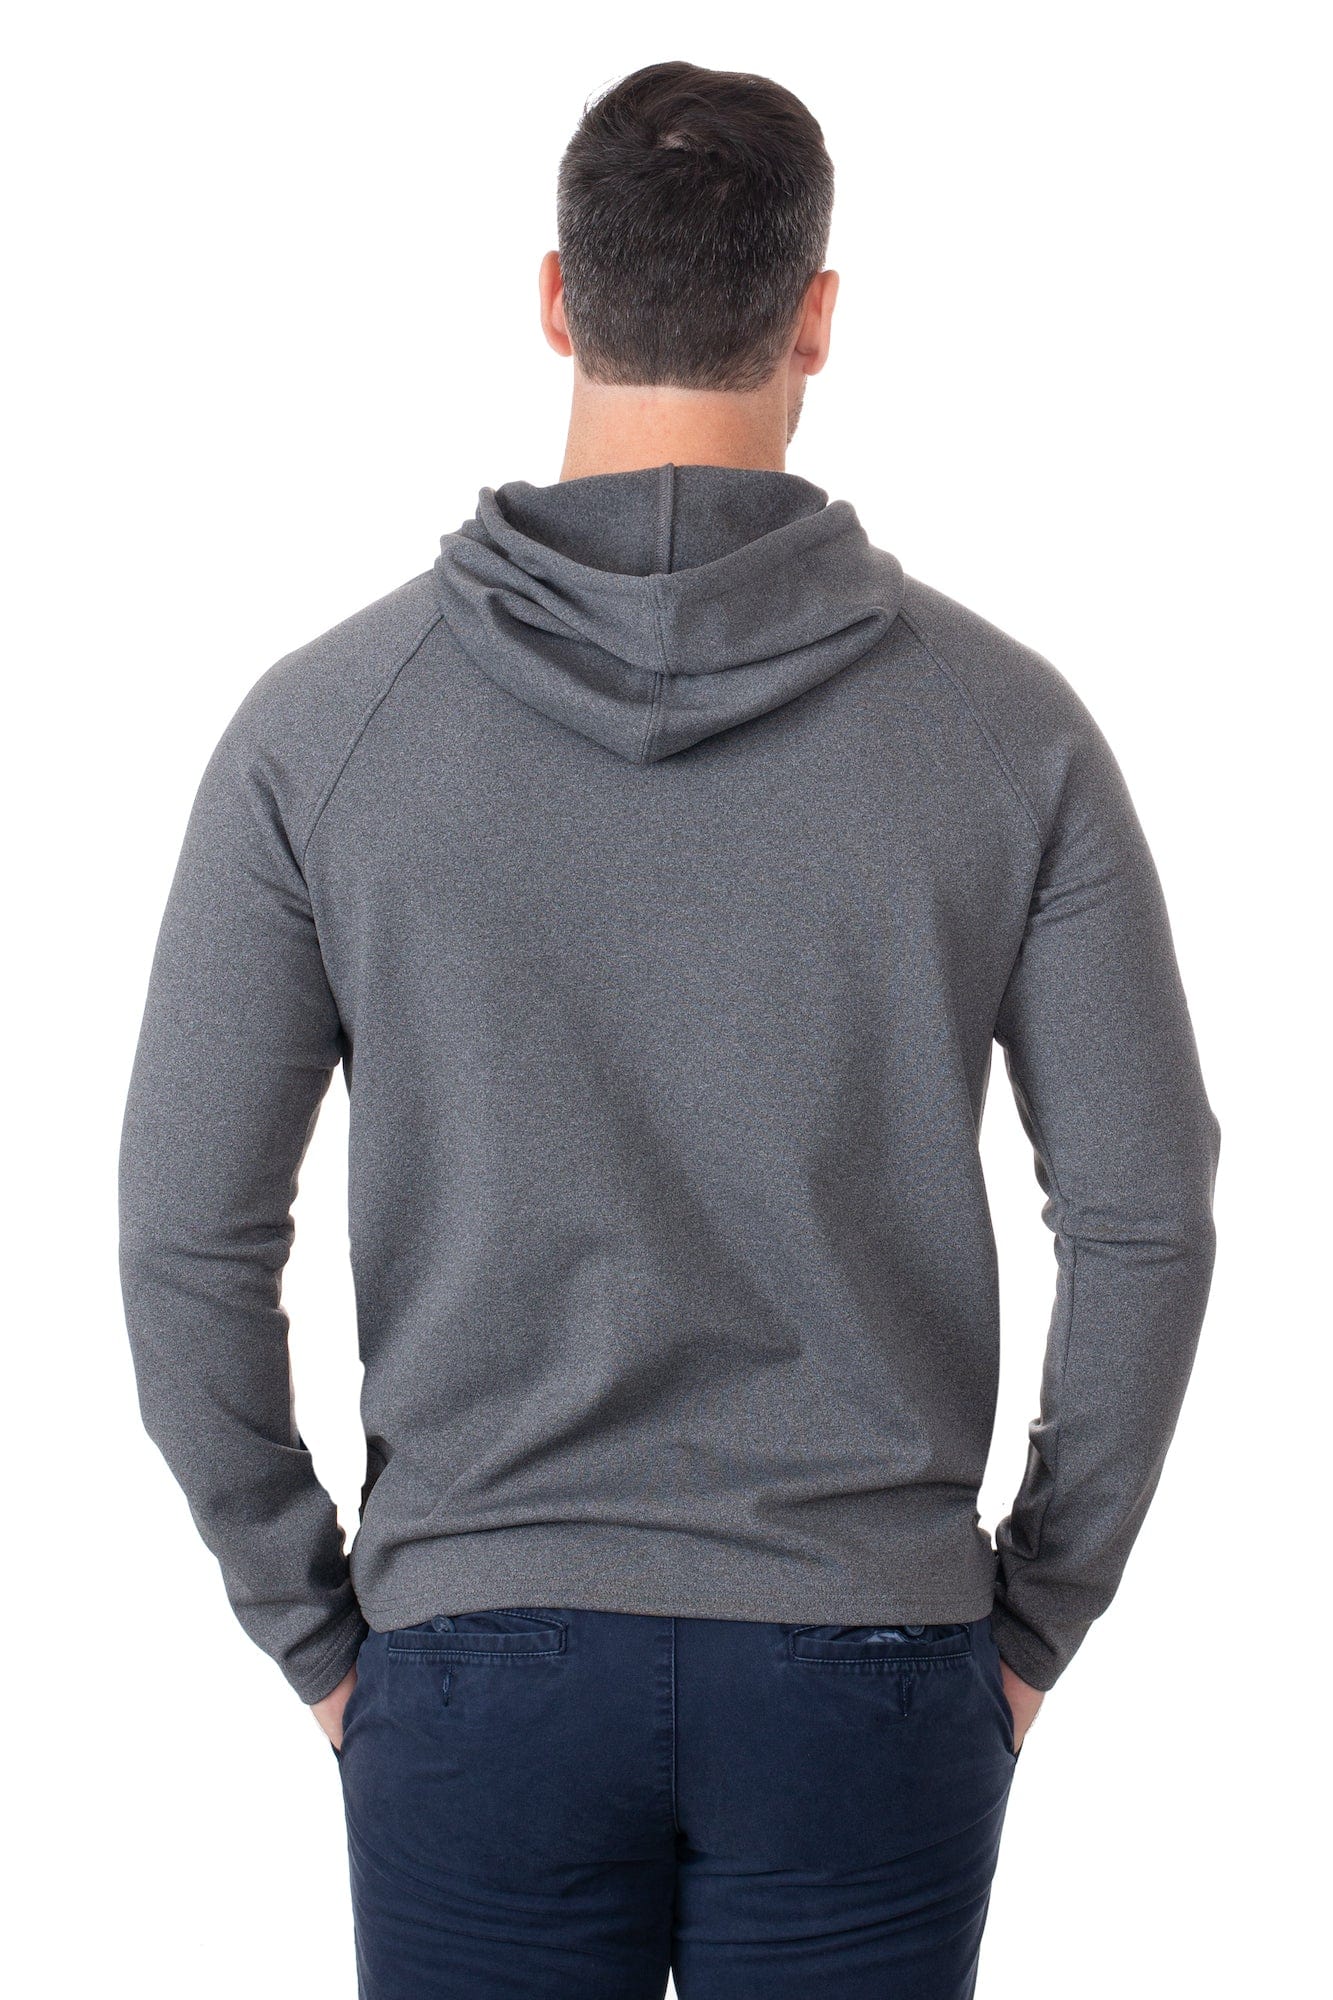 hooded pullover sweatshirt grey back